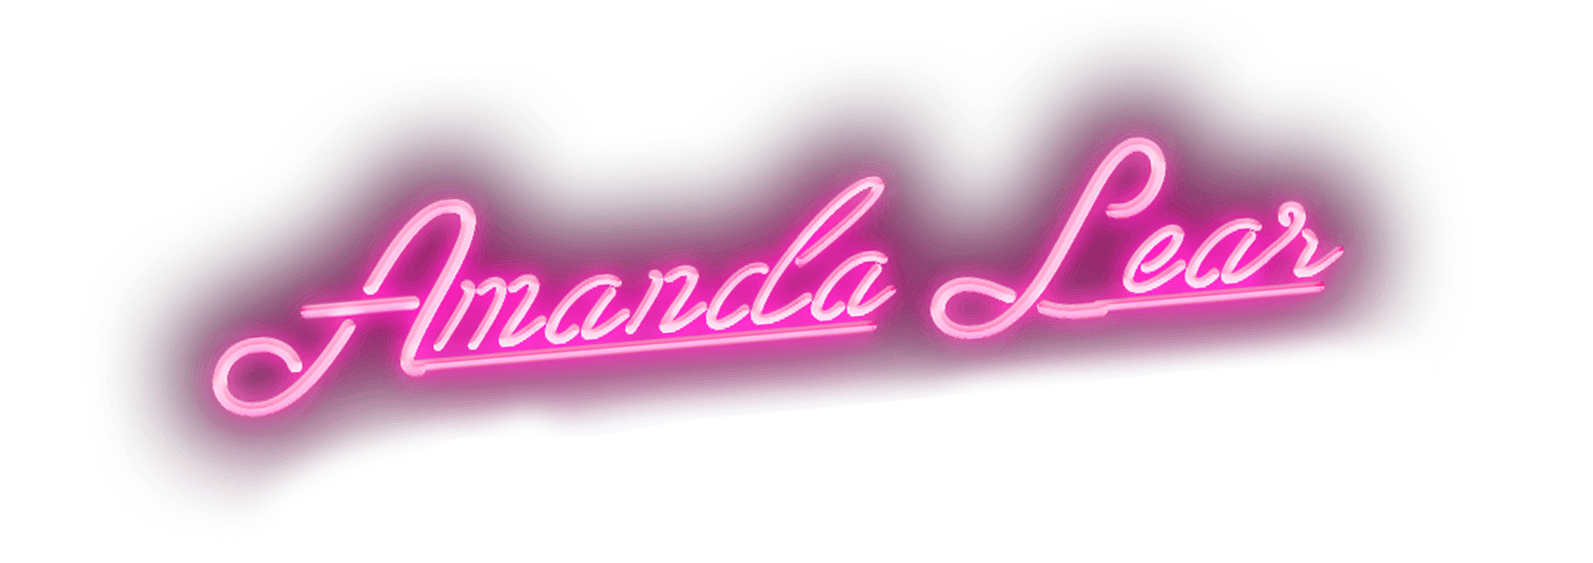 Lear Logo - Amanda Lear - Official website of Amanda Lear